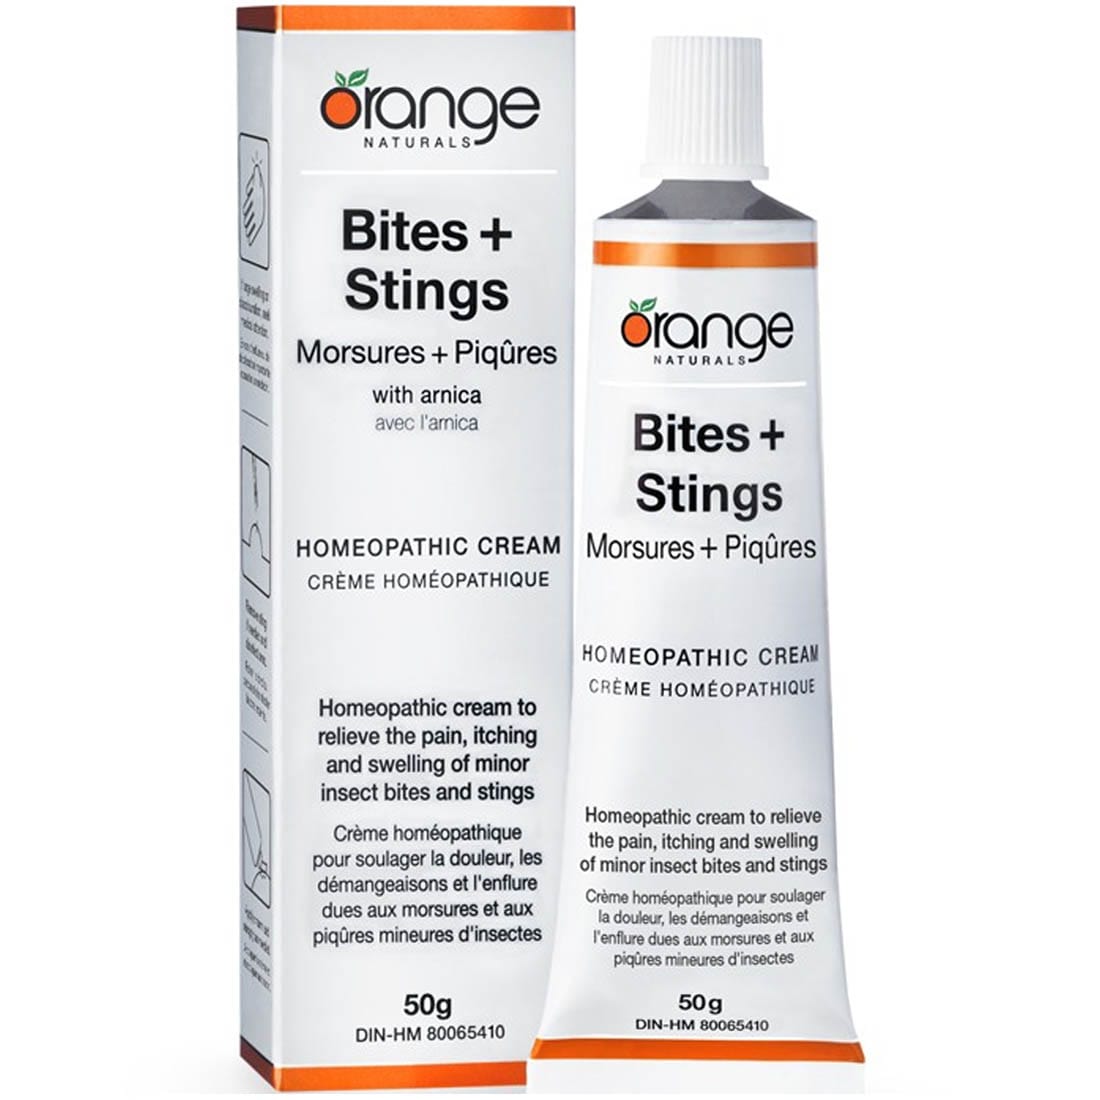 Orange Naturals Bites+Stings Homeopathic Cream, 50g